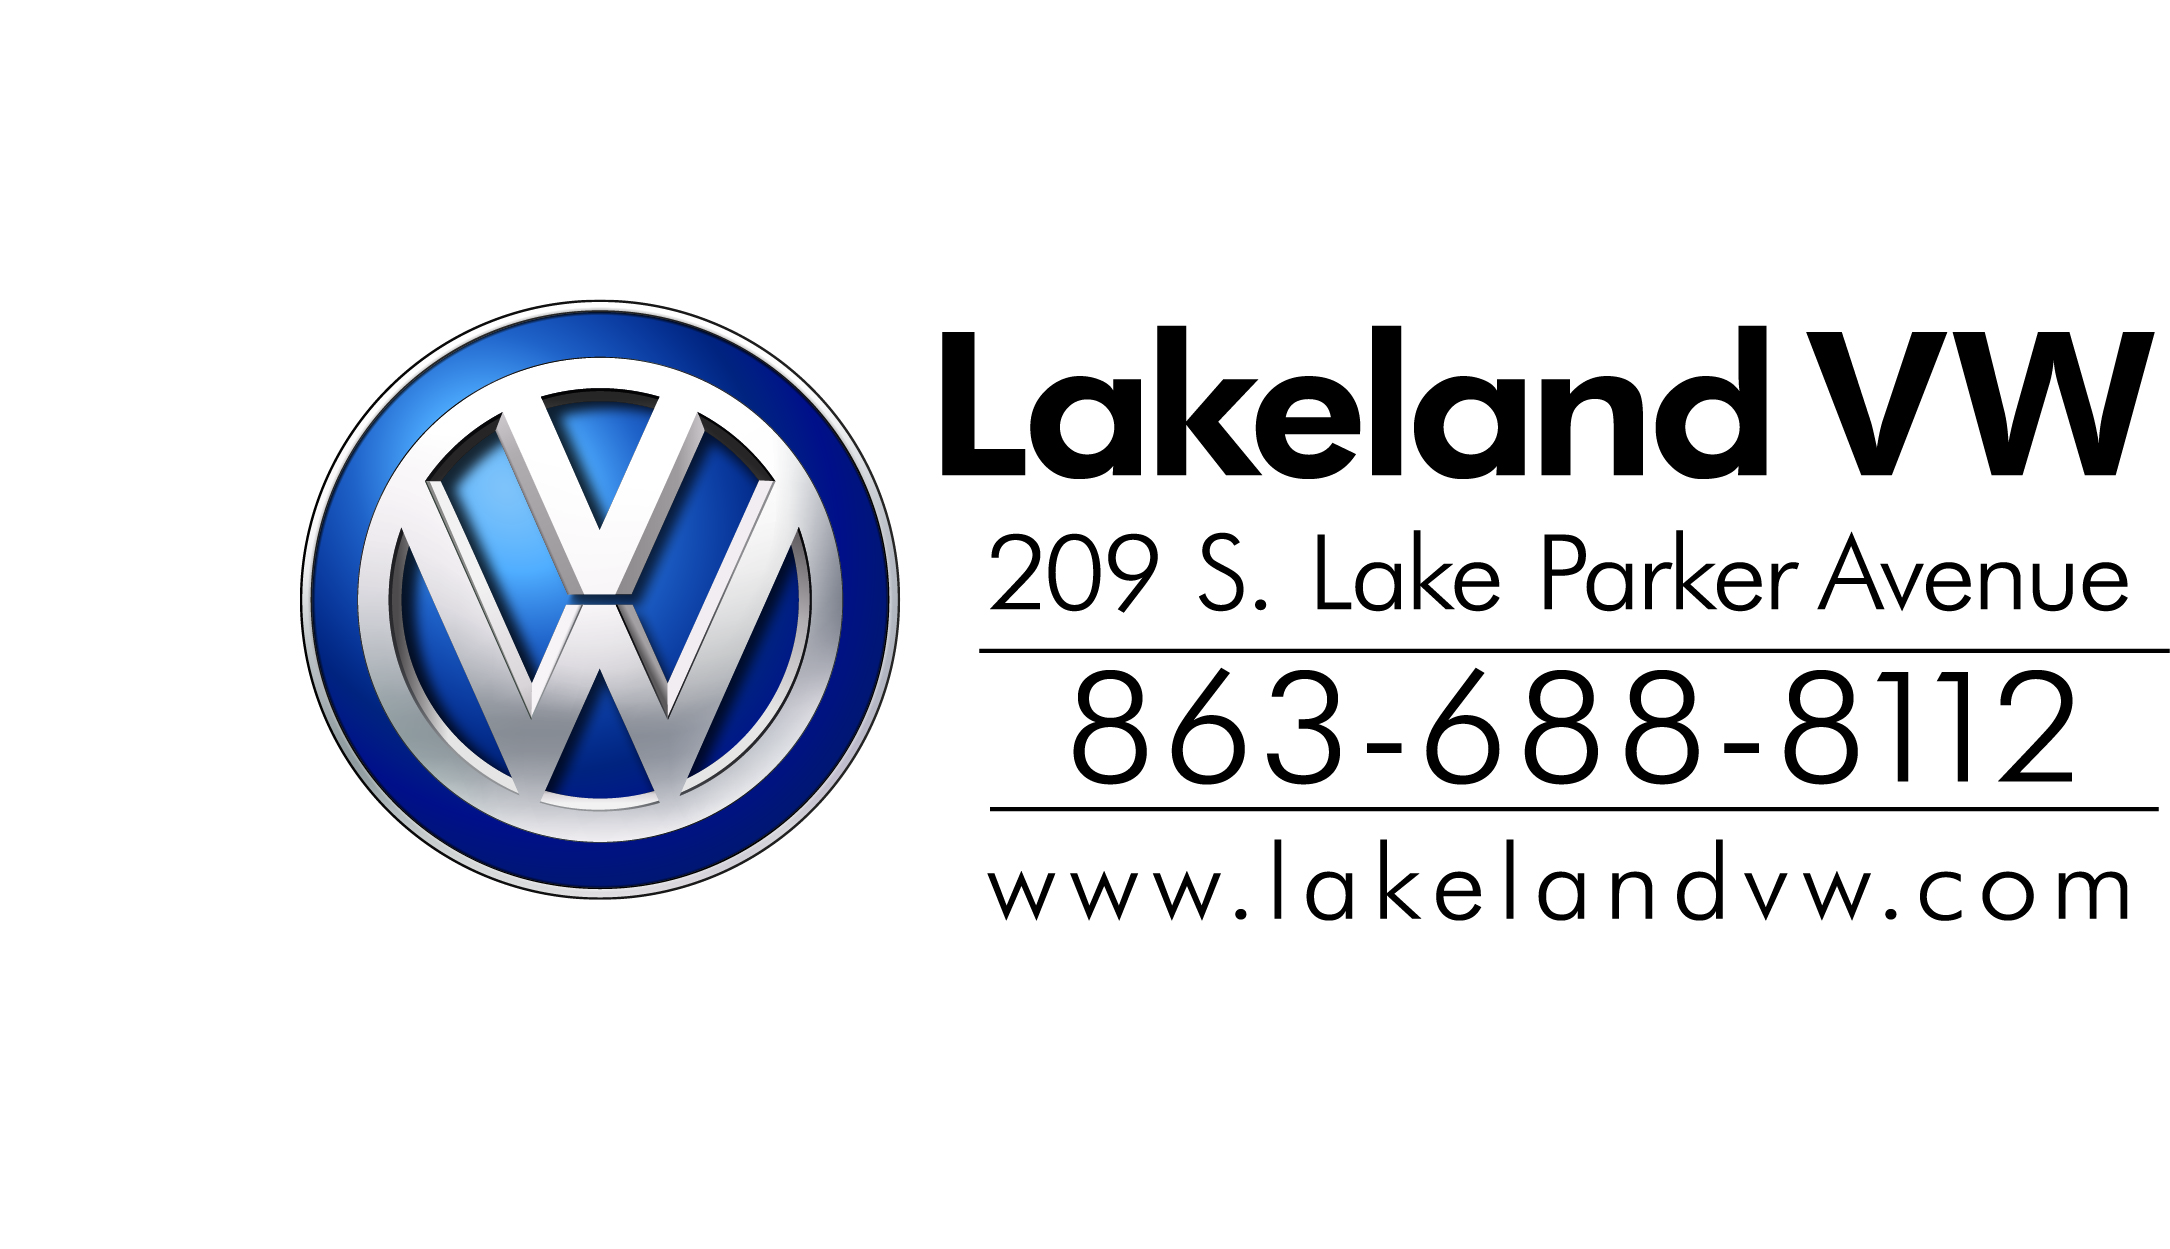 Lakeland VW